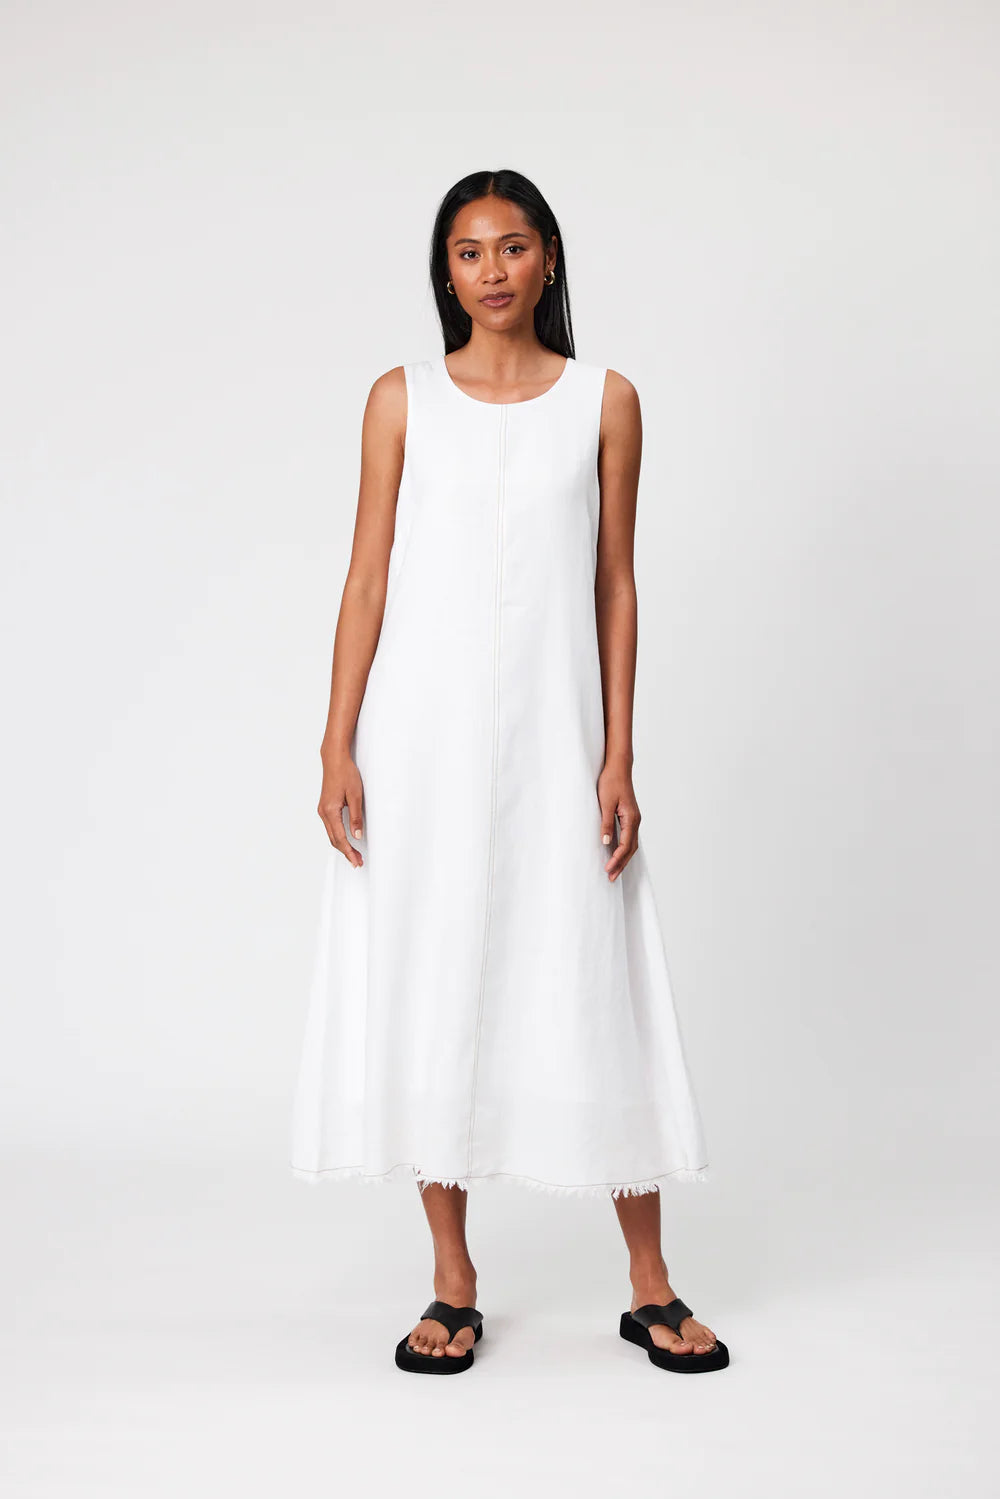 Marlow - Florence Linen Dress - White